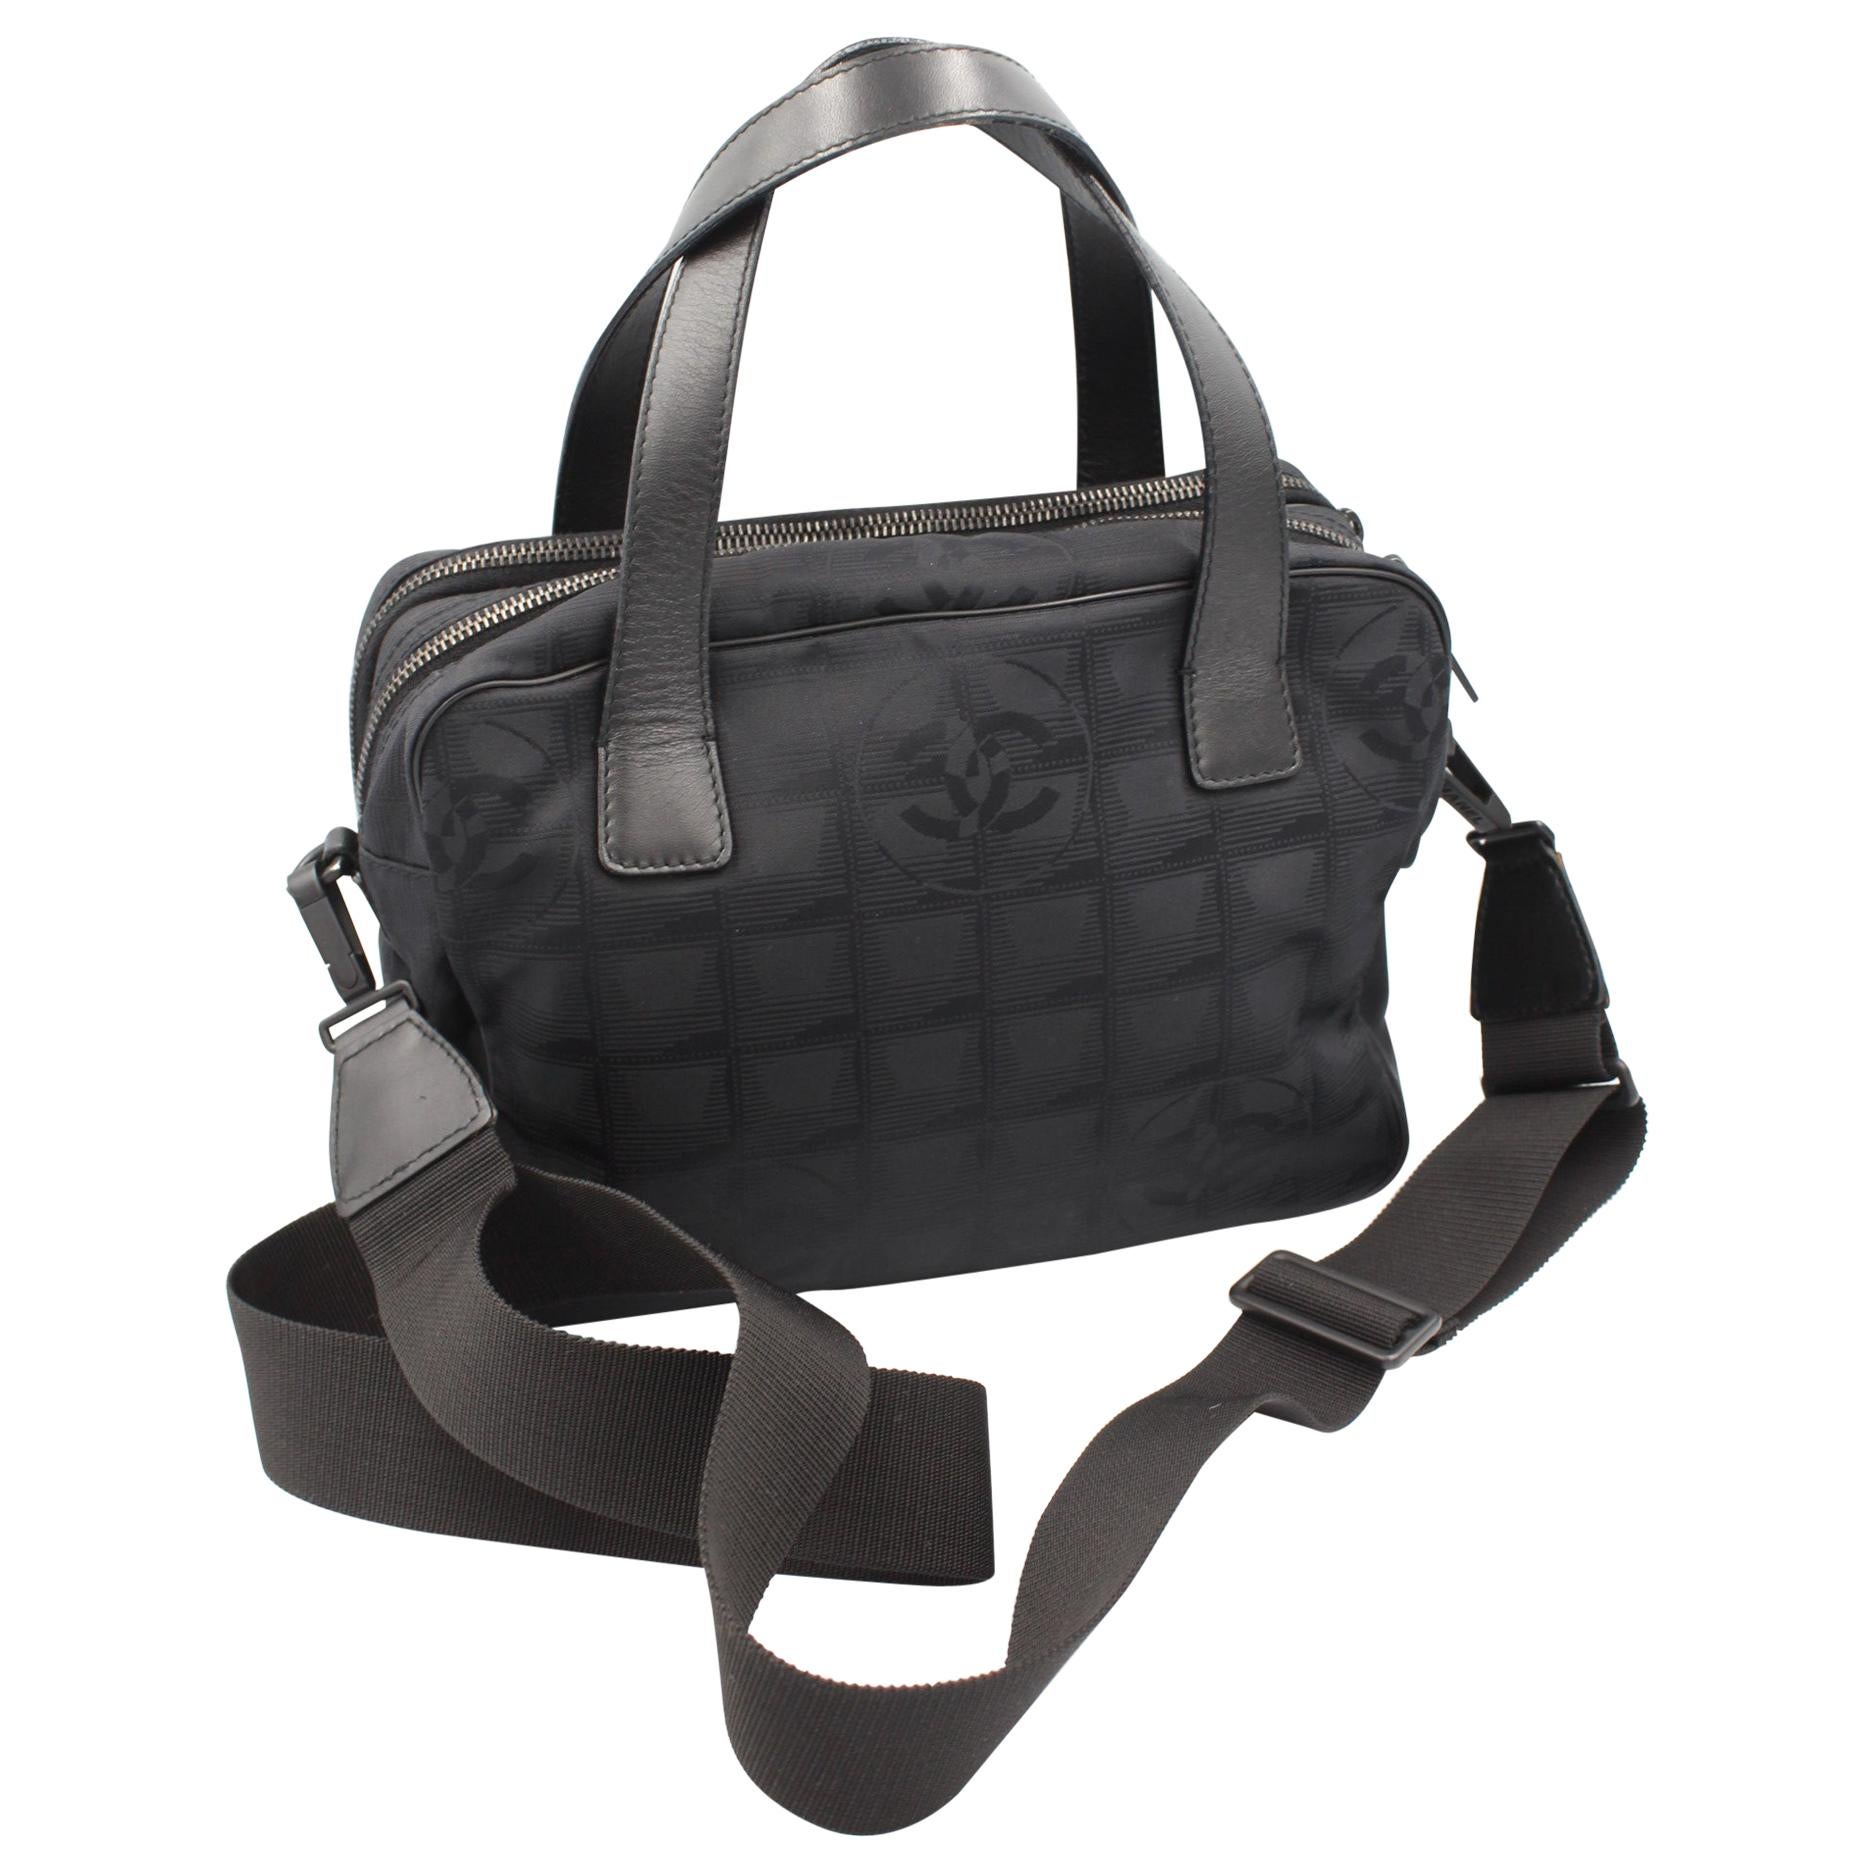 Black Nylon Chanel Travel Line Bag with Brossbody strap